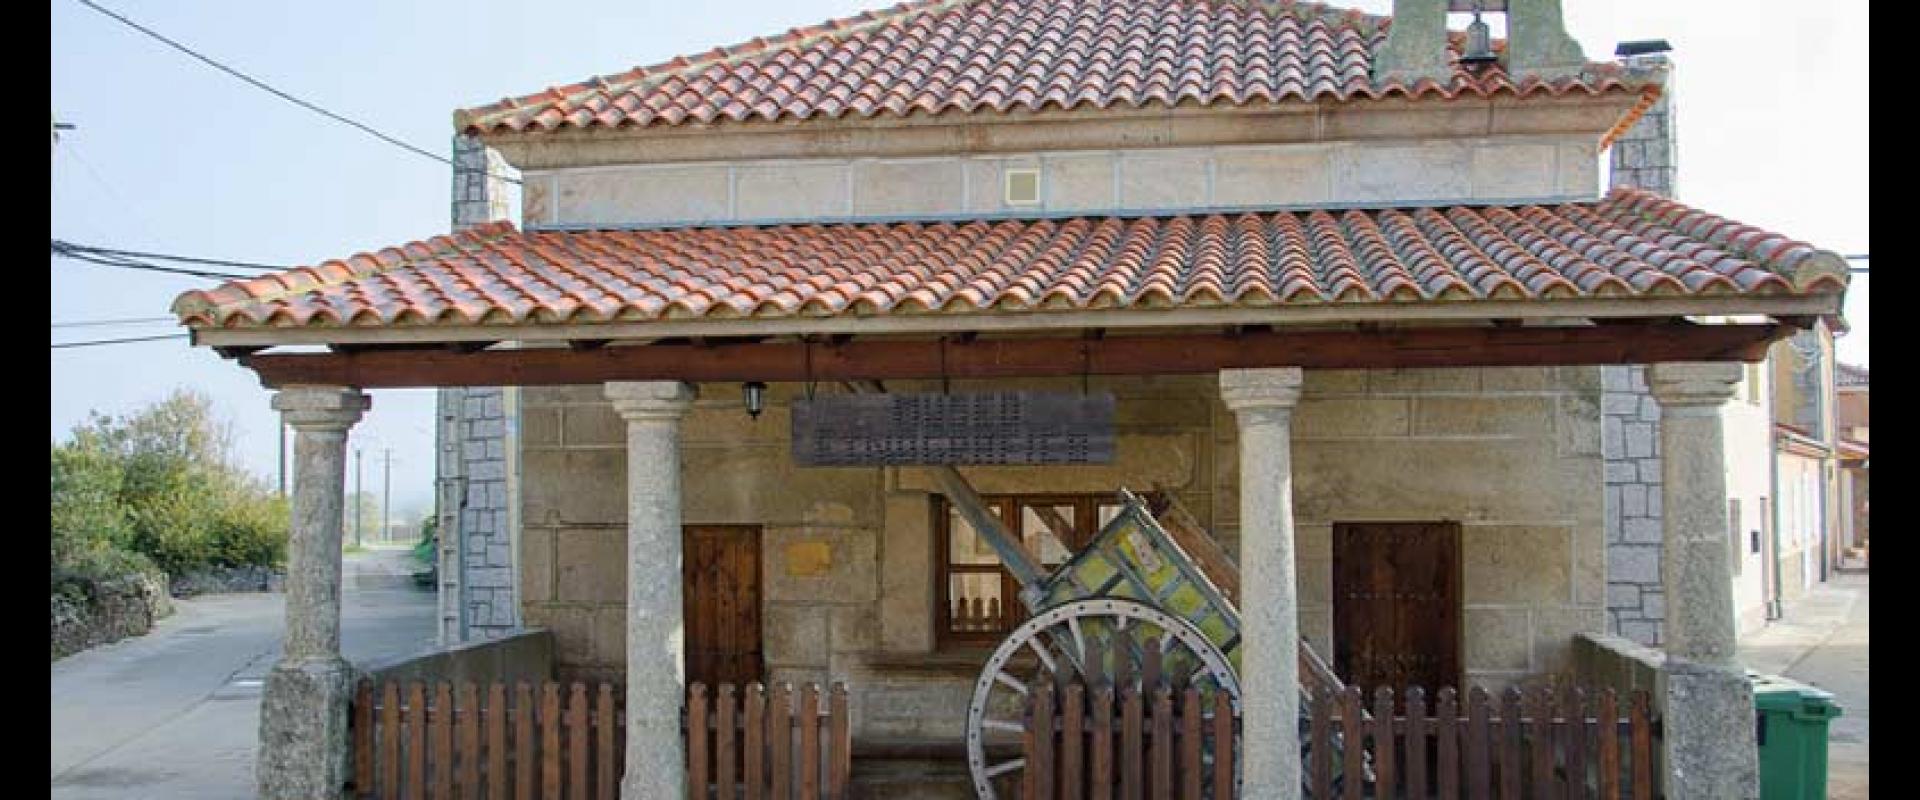 Local ethnographic museum in Peralejos de Abajo 